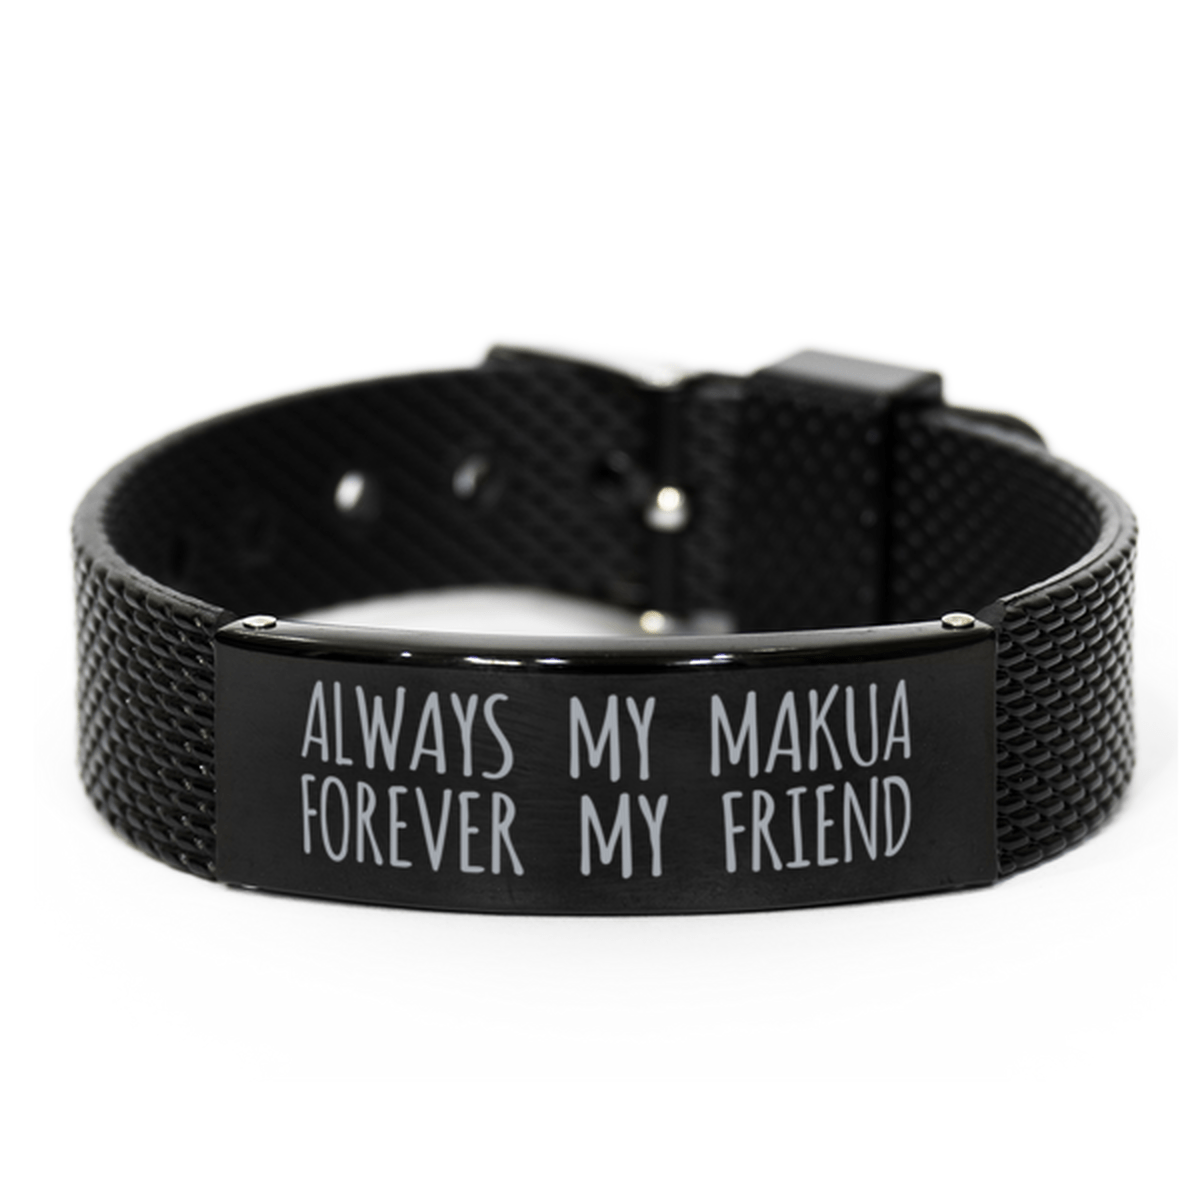 Inspirational Makua Black Shark Mesh Bracelet, Always My Makua Forever My Friend, Best Birthday Gifts for Family Friends